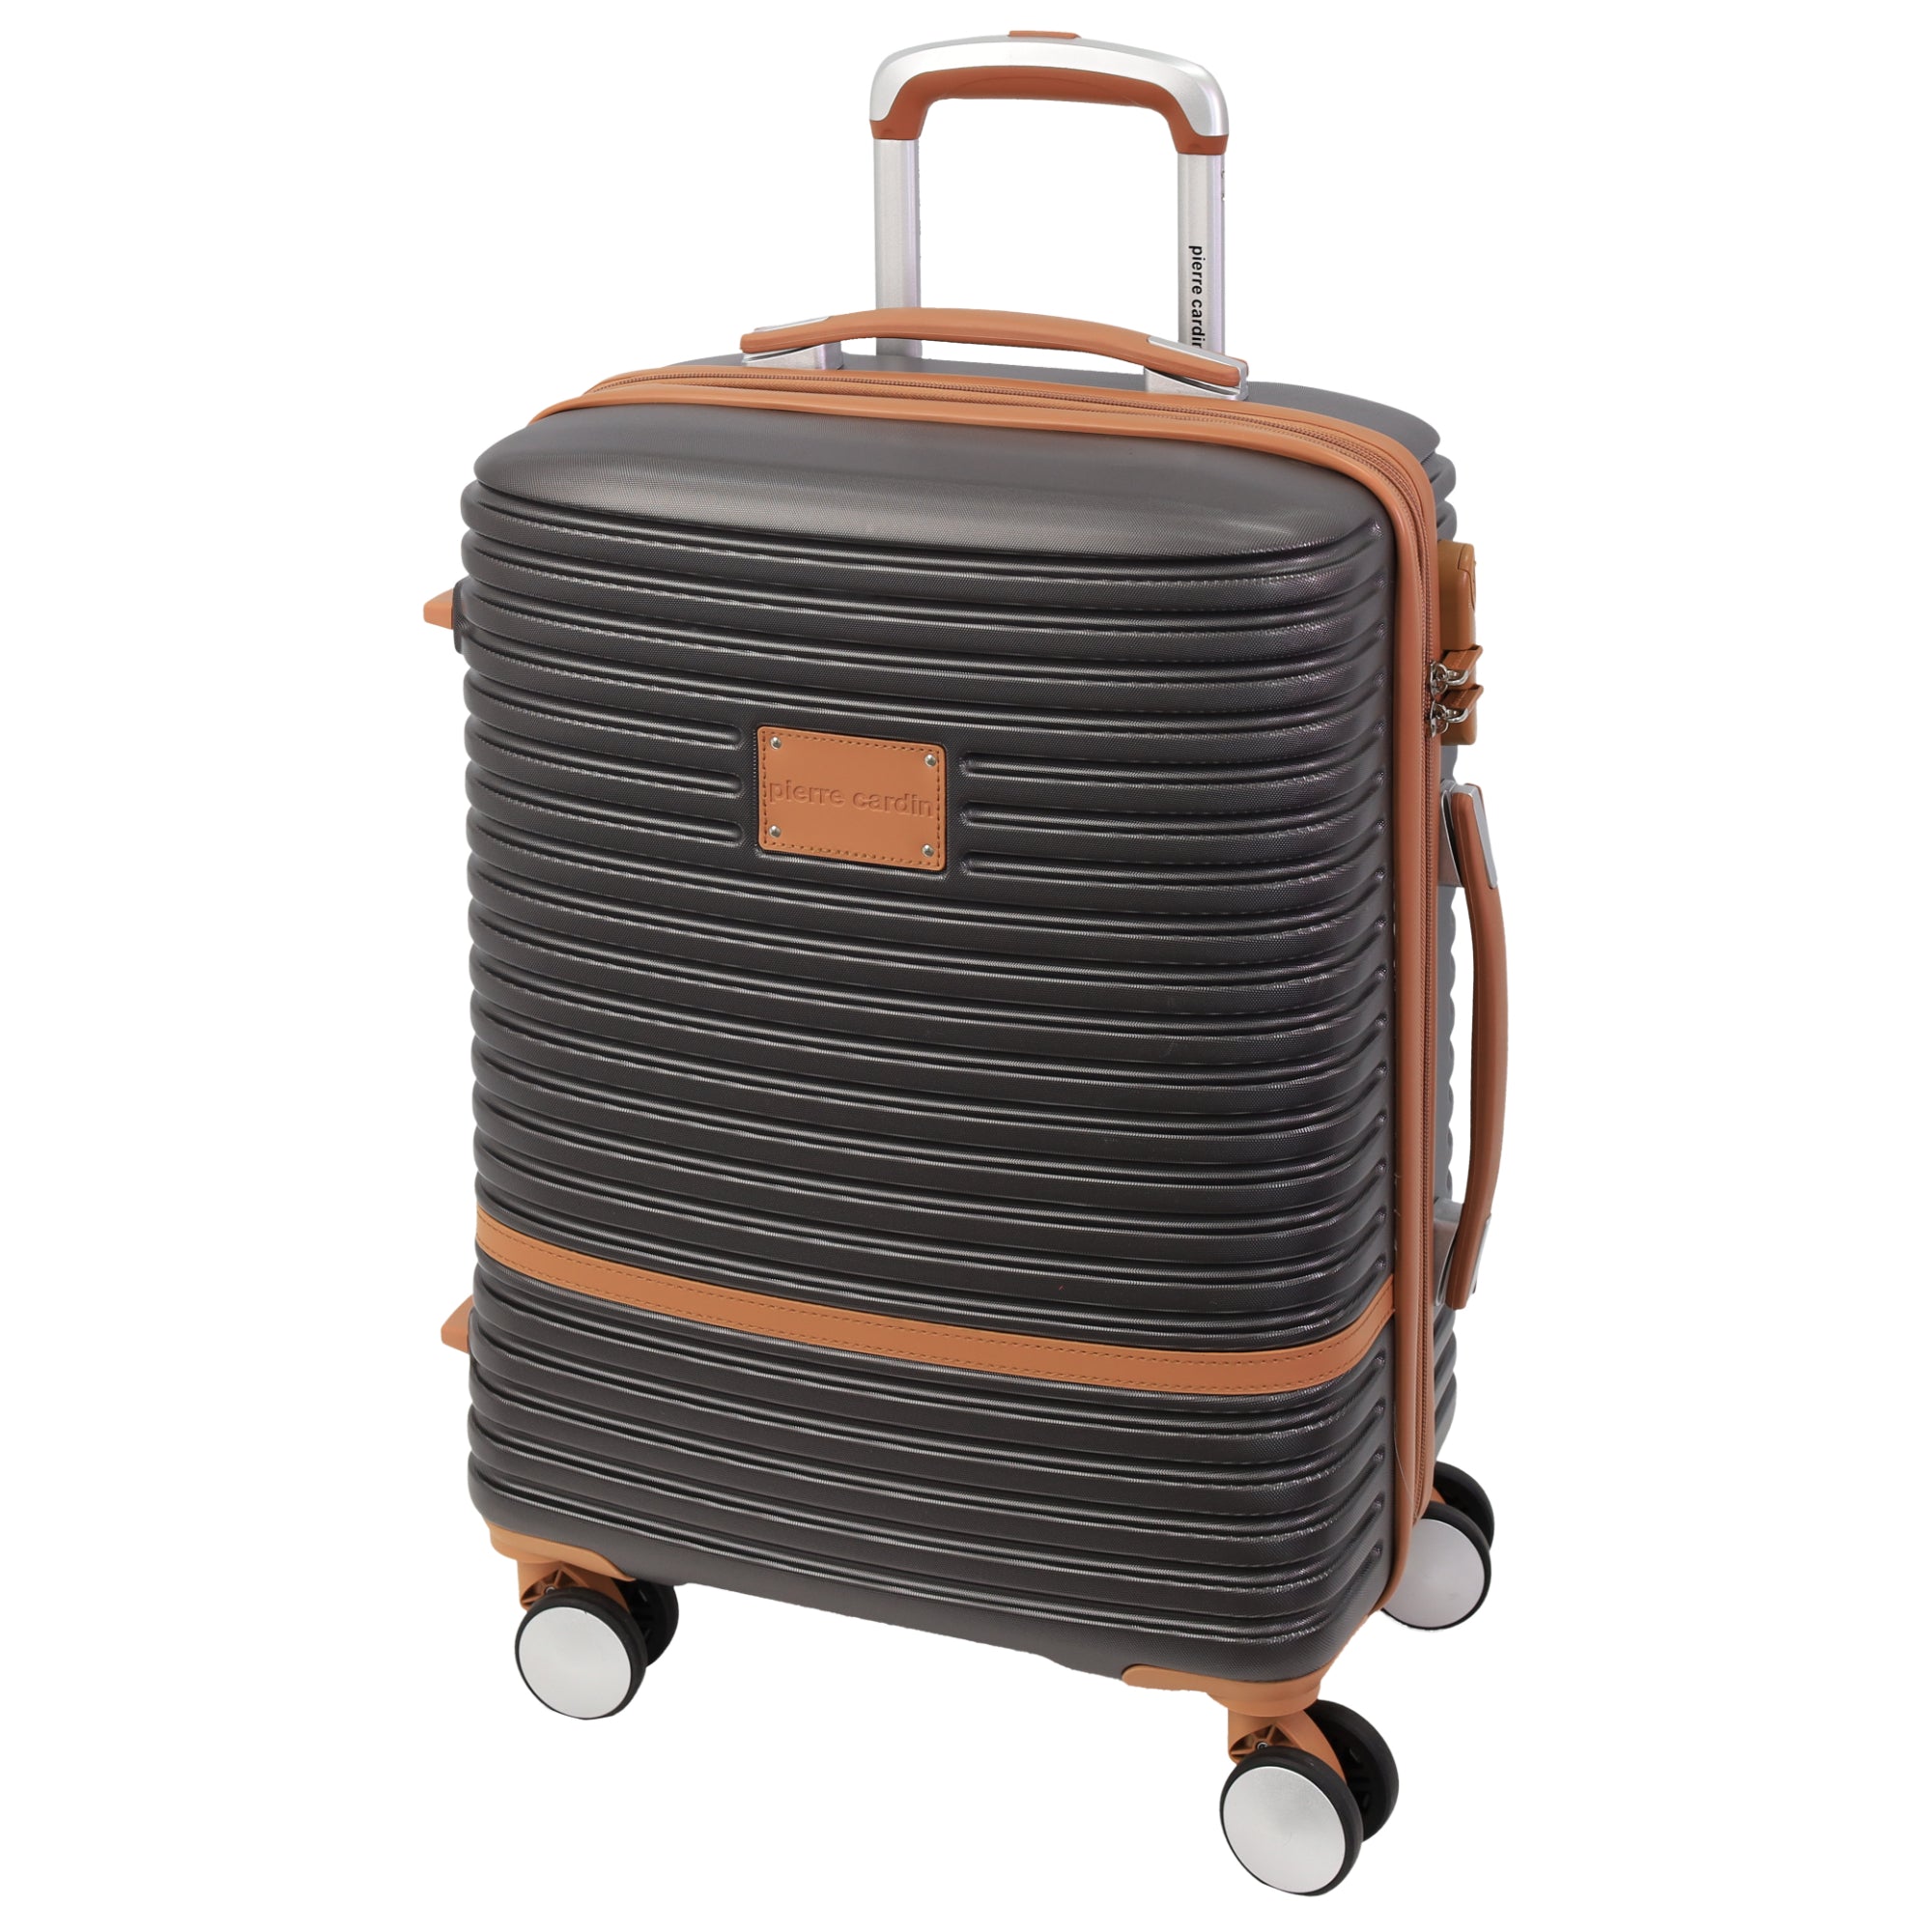 Pierre Cardin 54cm CABIN Hard Shell Suitcase in Charcoal